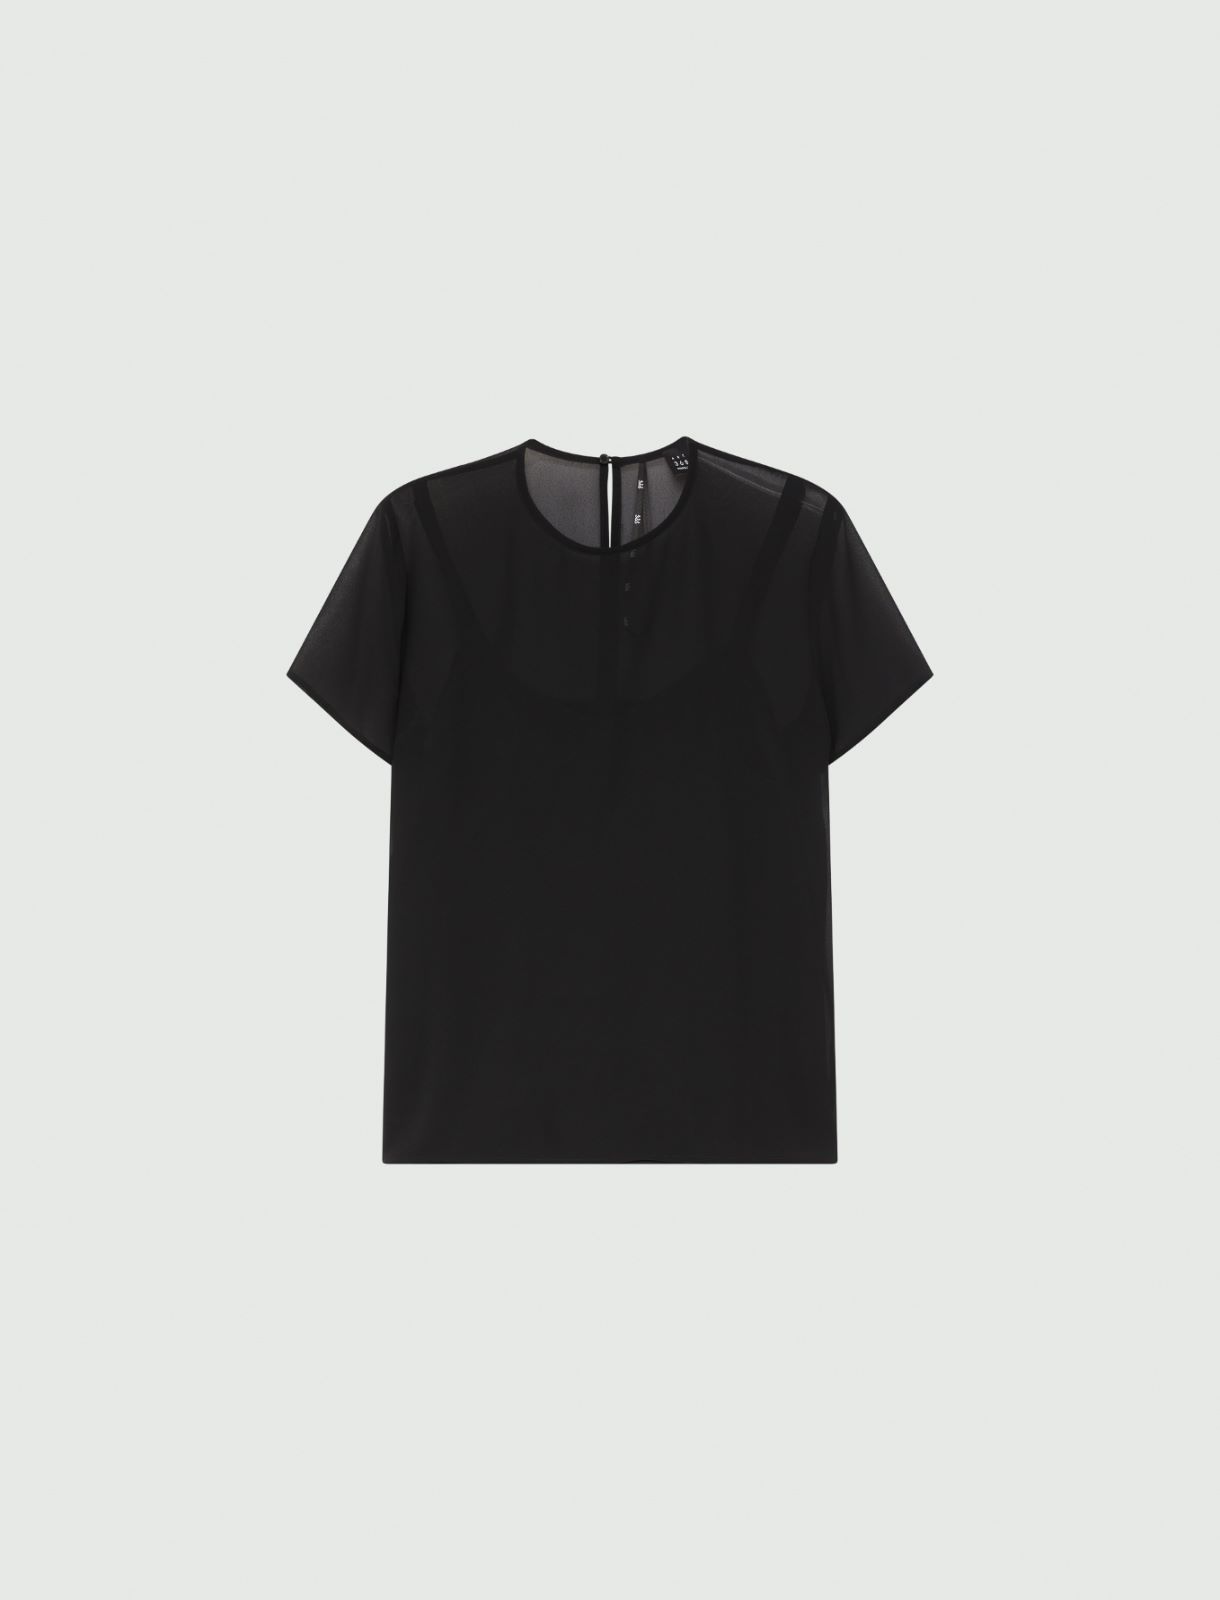 Georgette shirt - Black - Marella - 2